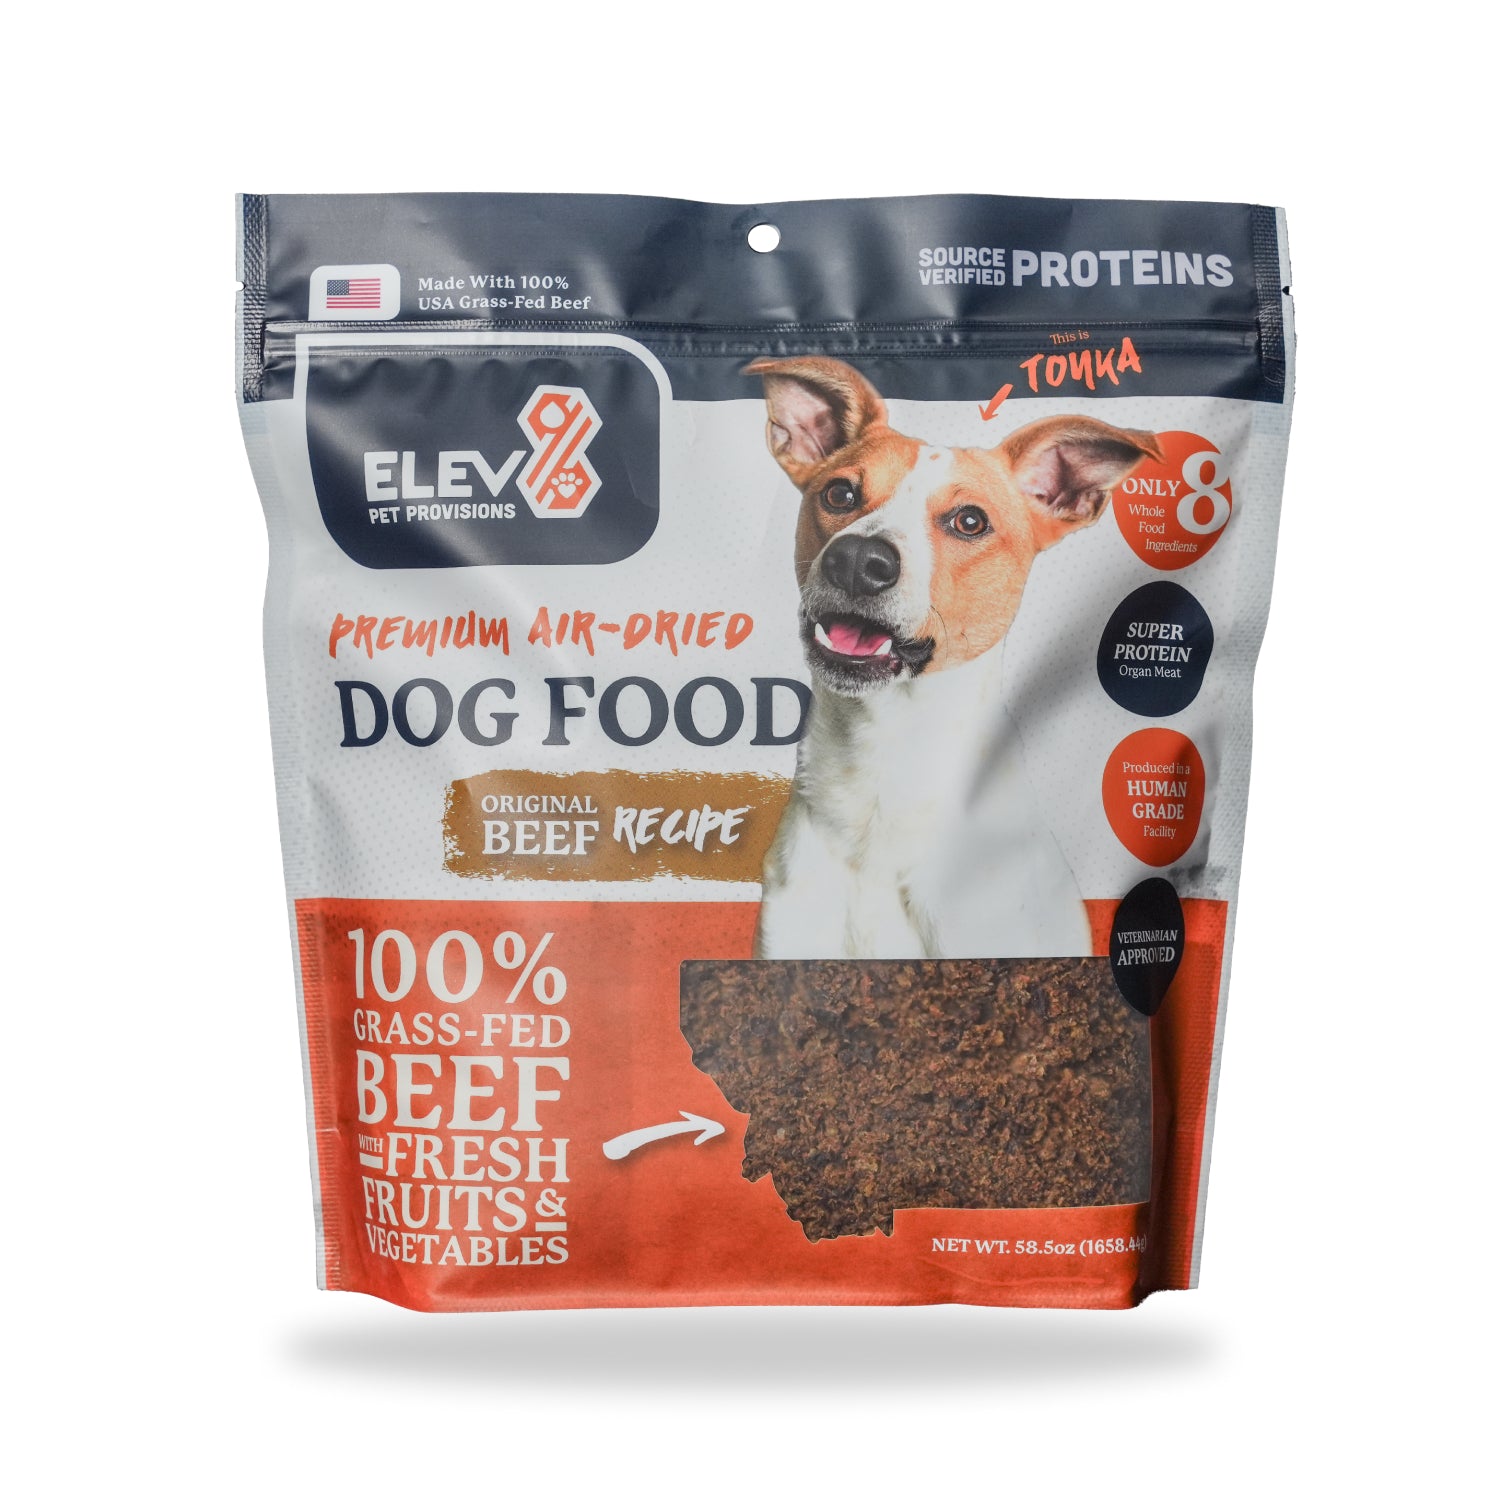 Premium Air-Dried Dog Food - Original Beef Recipe - Elevate Pet Provisions